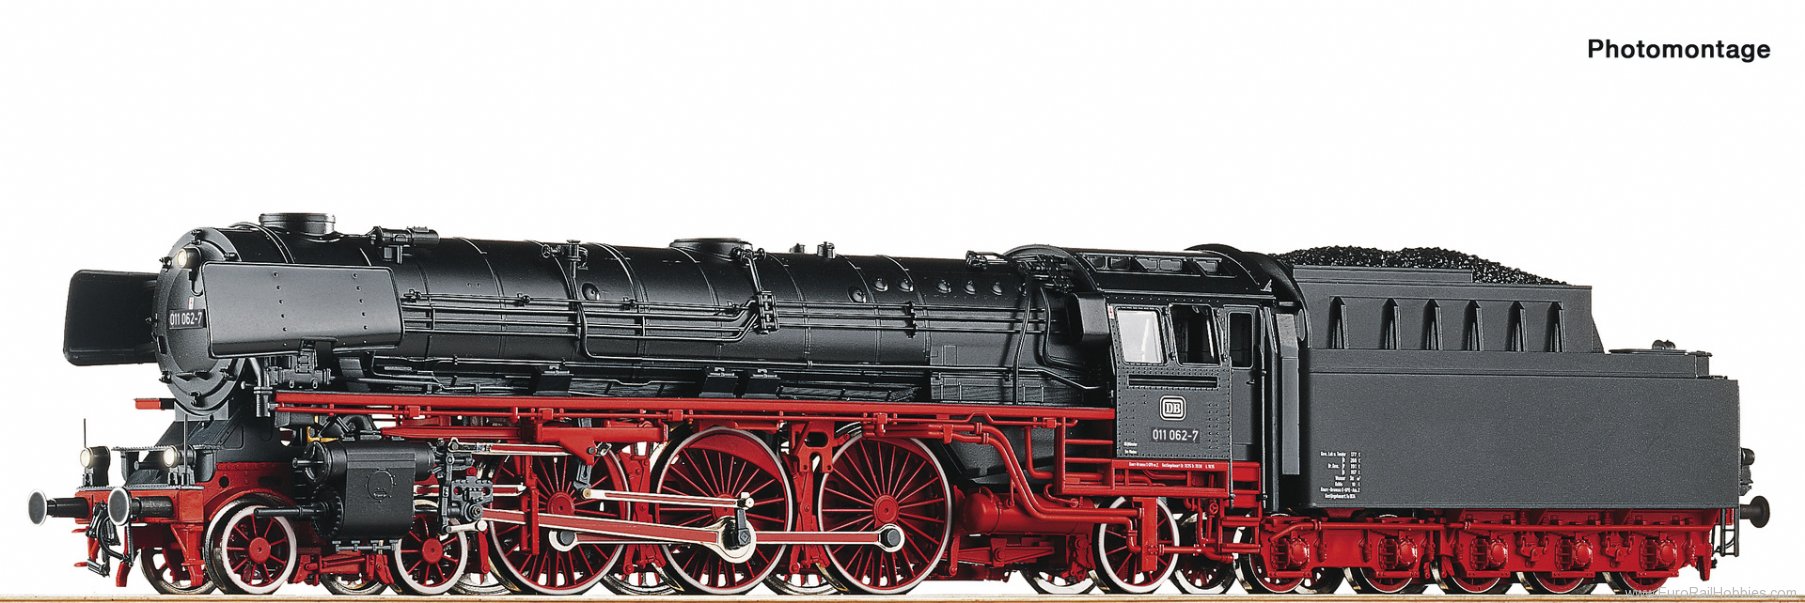 Roco 70052 Steam locomotive 011 062-7 DB (Digital Sound)